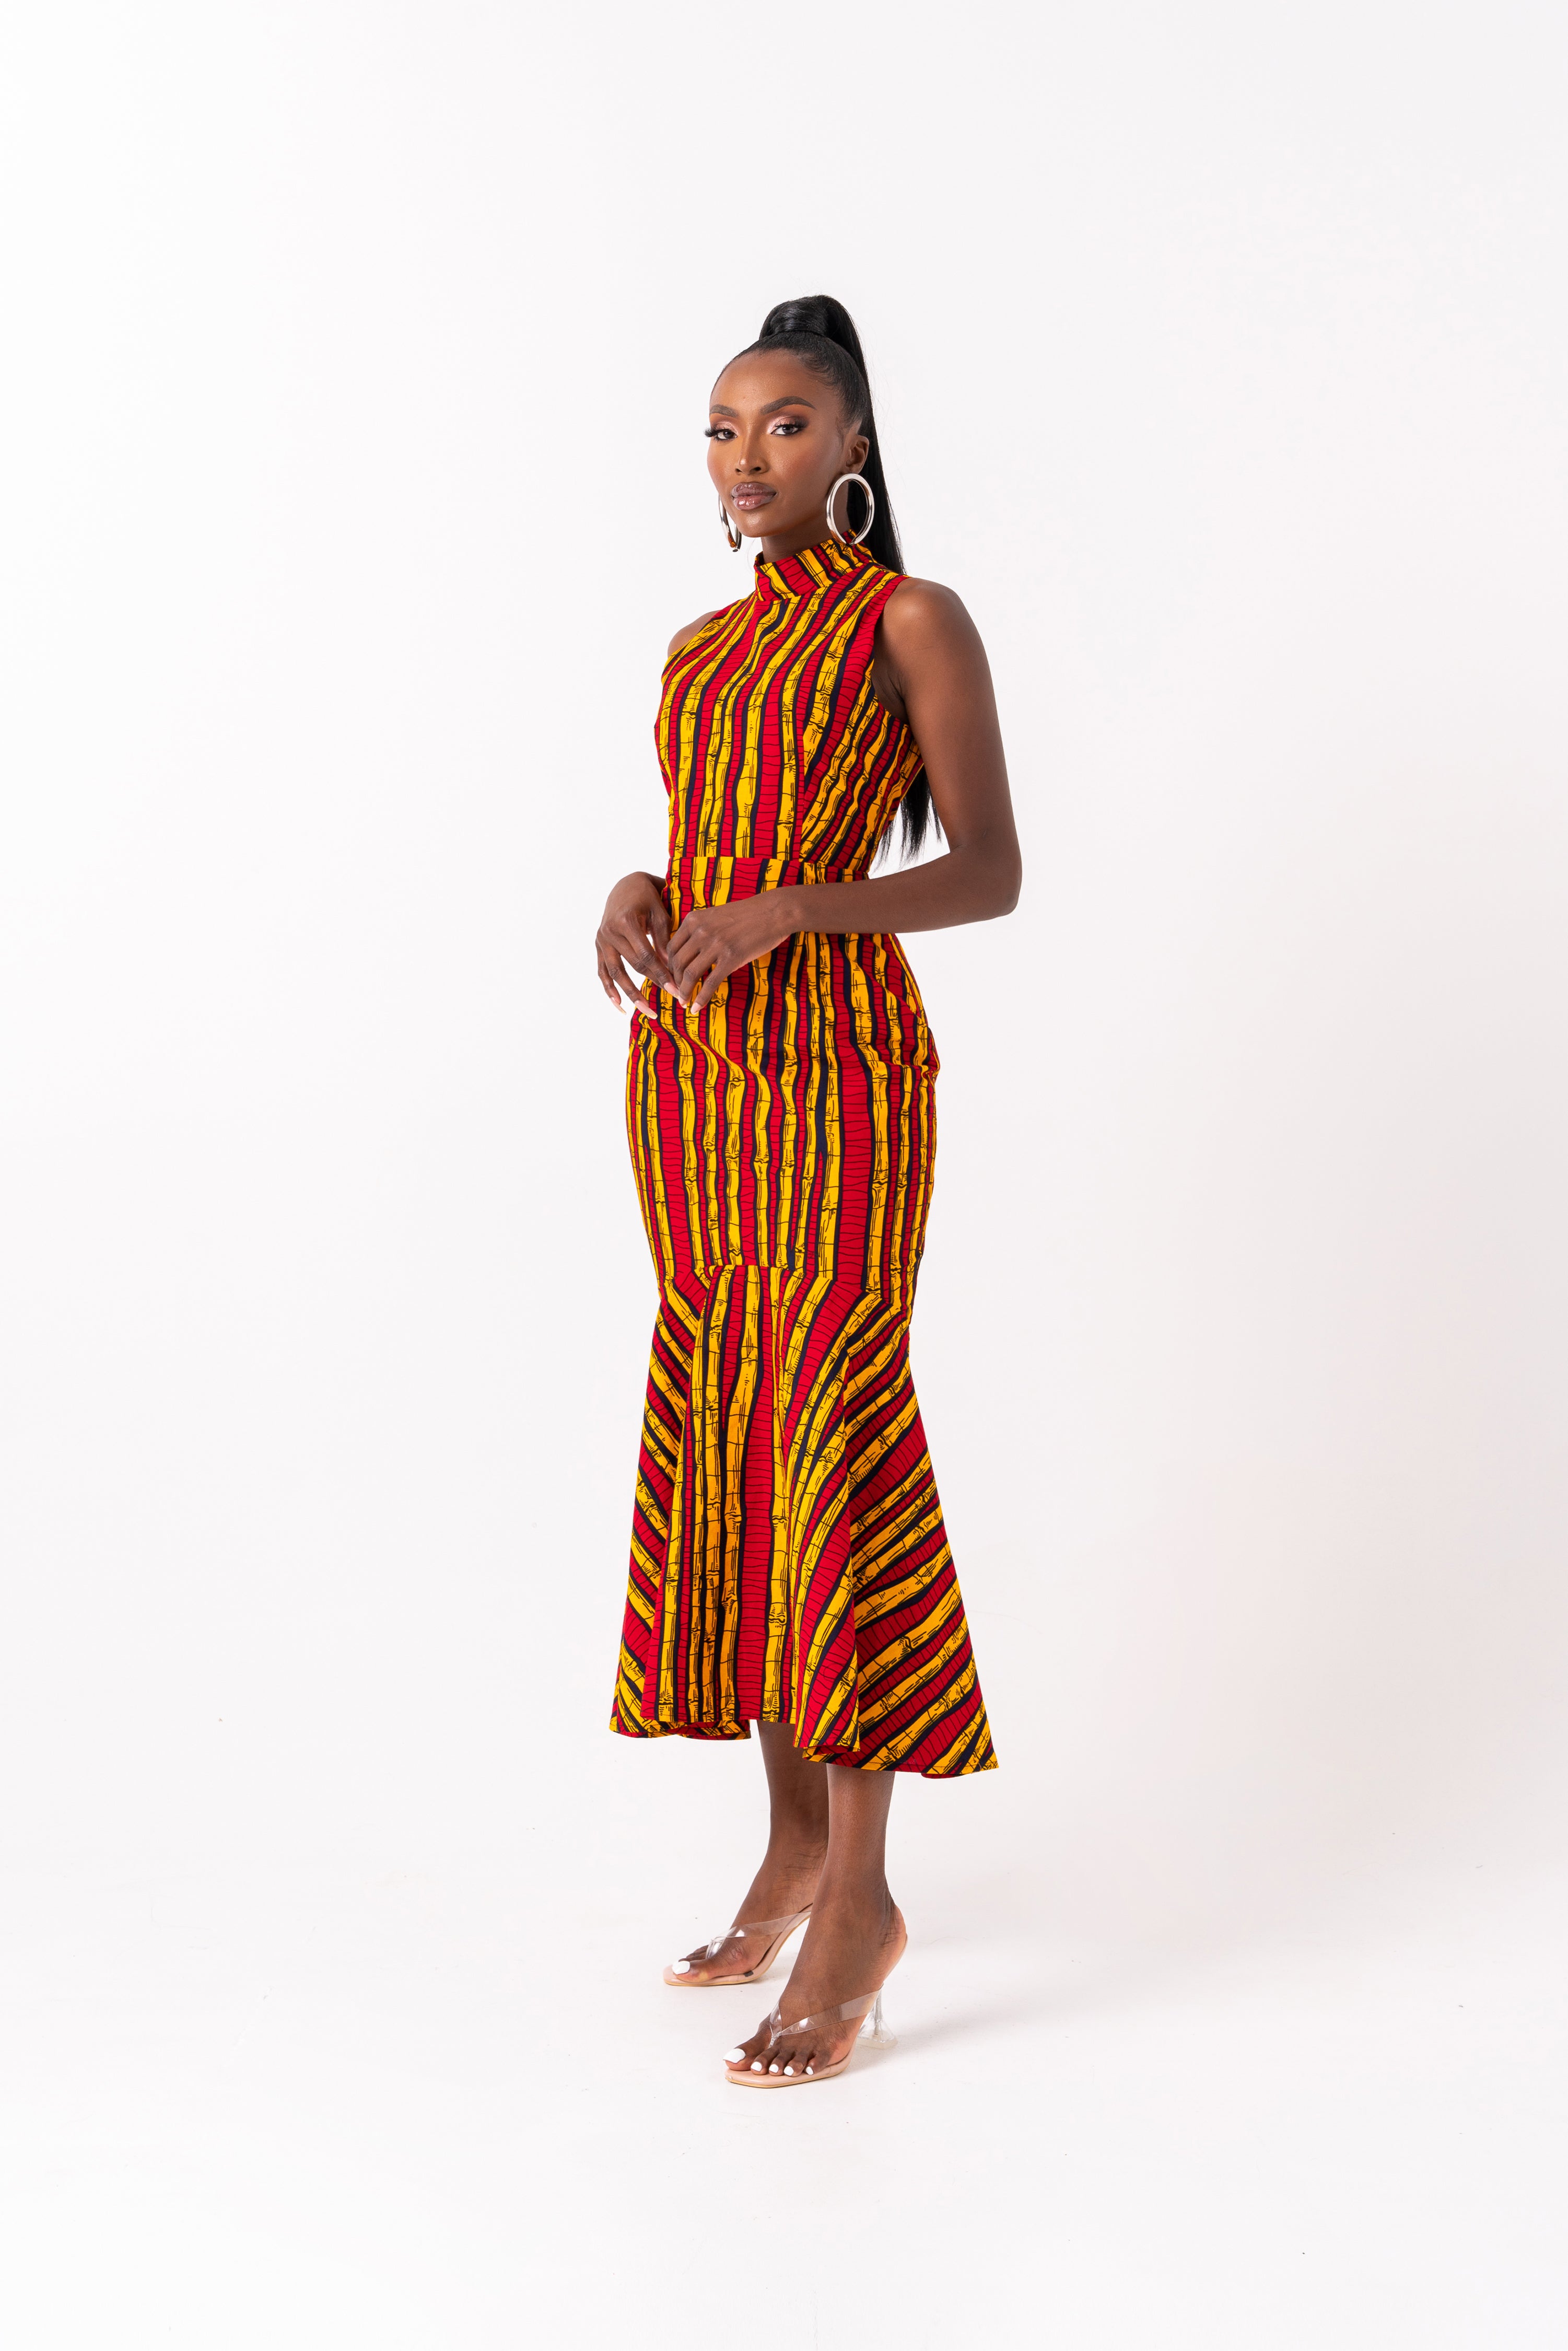 RITA African Print Maxi Mock Neck Peplum Dress